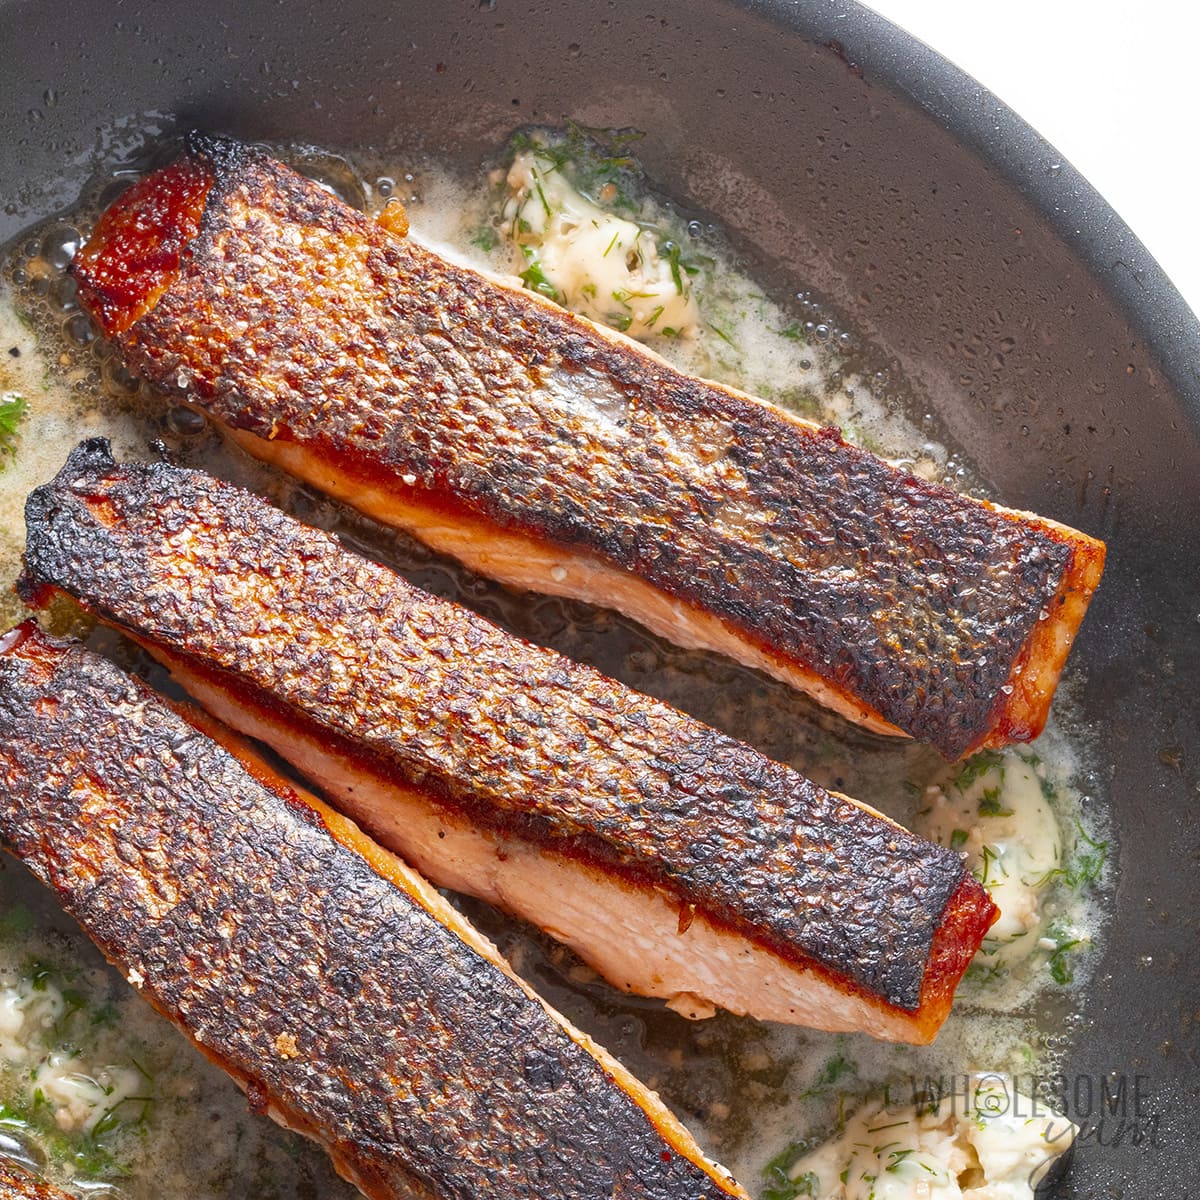 Pan seared salmon in skillet, skin side up.